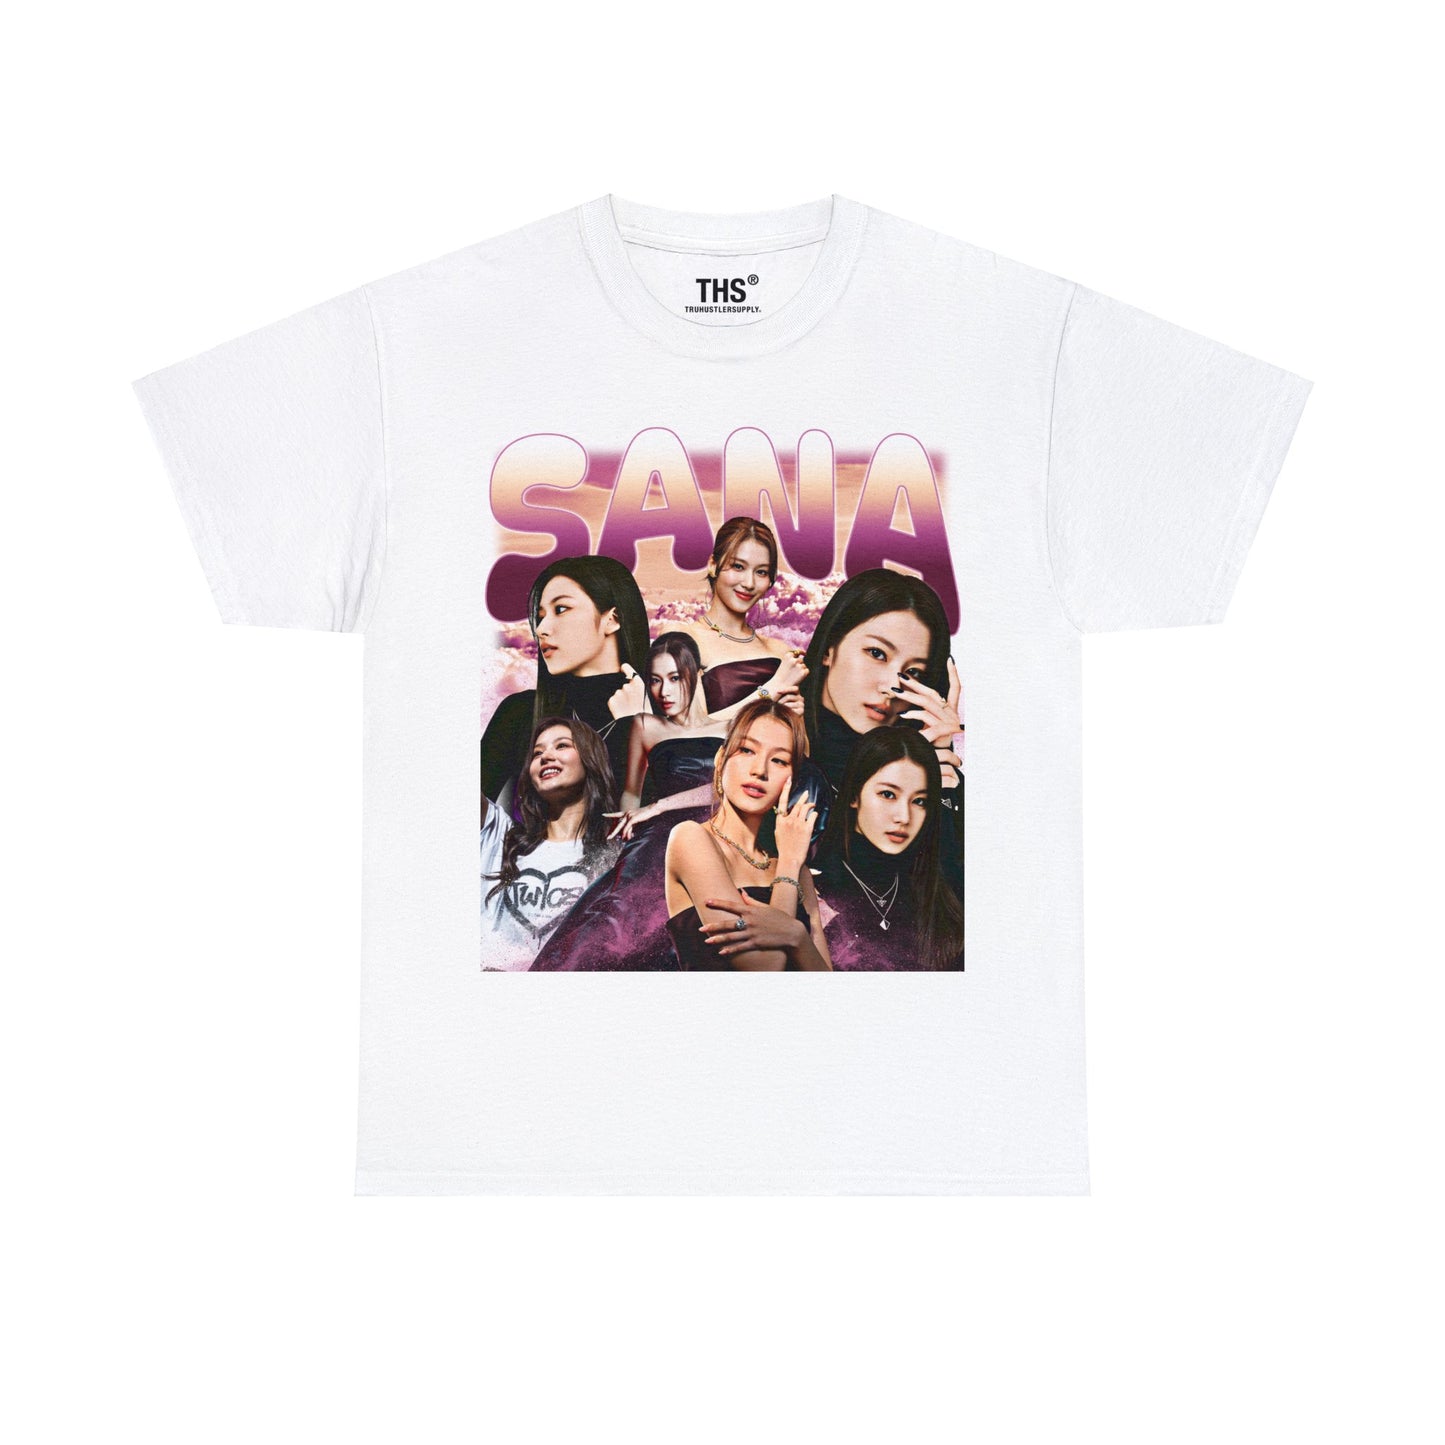 Sana Twice Bootleg Graphic T Shirt